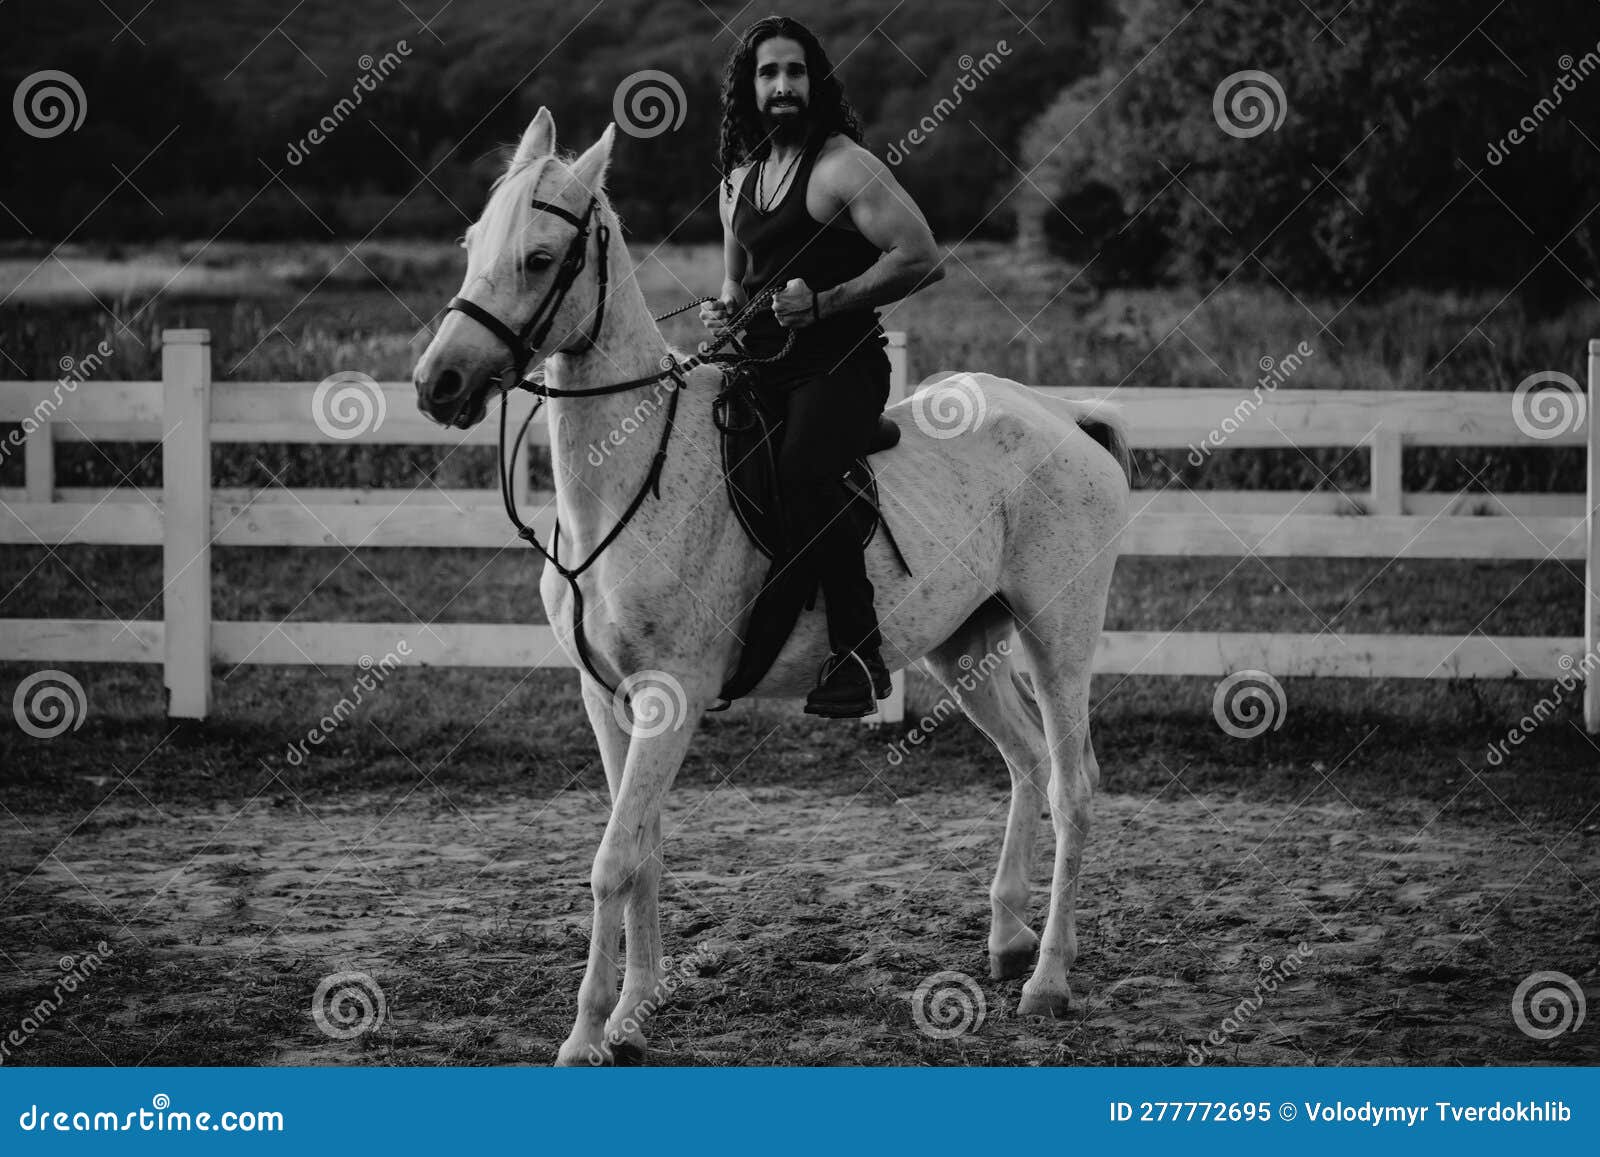 man riding a horse. hunky cowboy rides horse. country life concept.